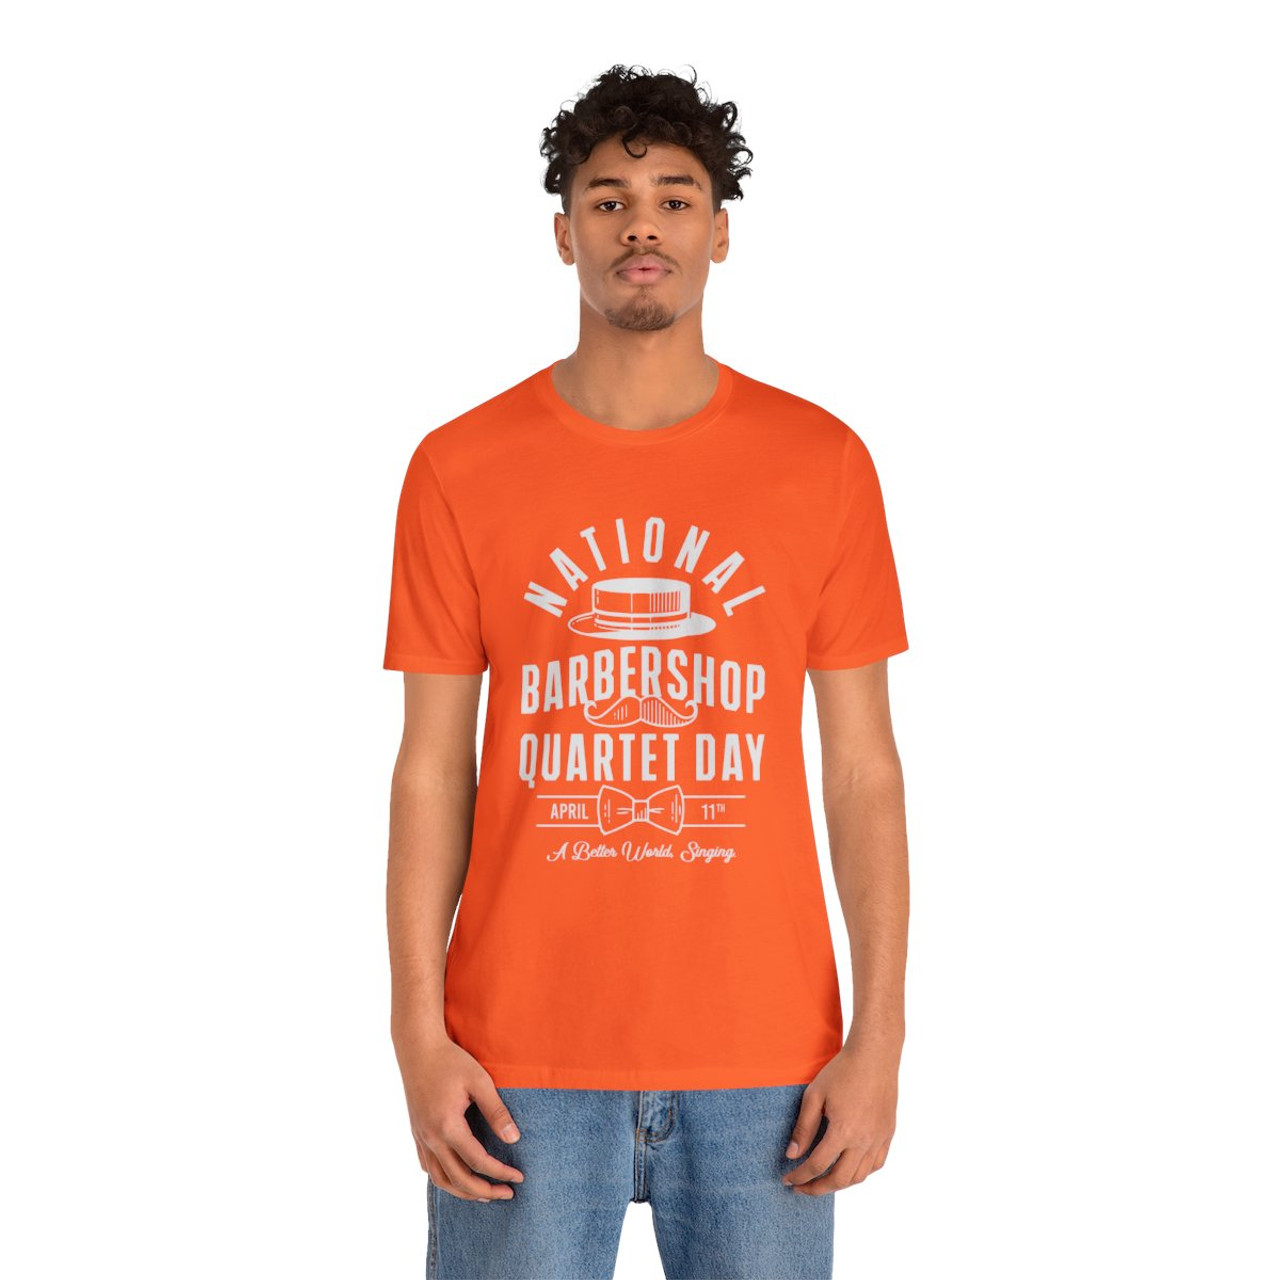 National Barbershop Quartet Day T-shirt- Multiple Colors Available!